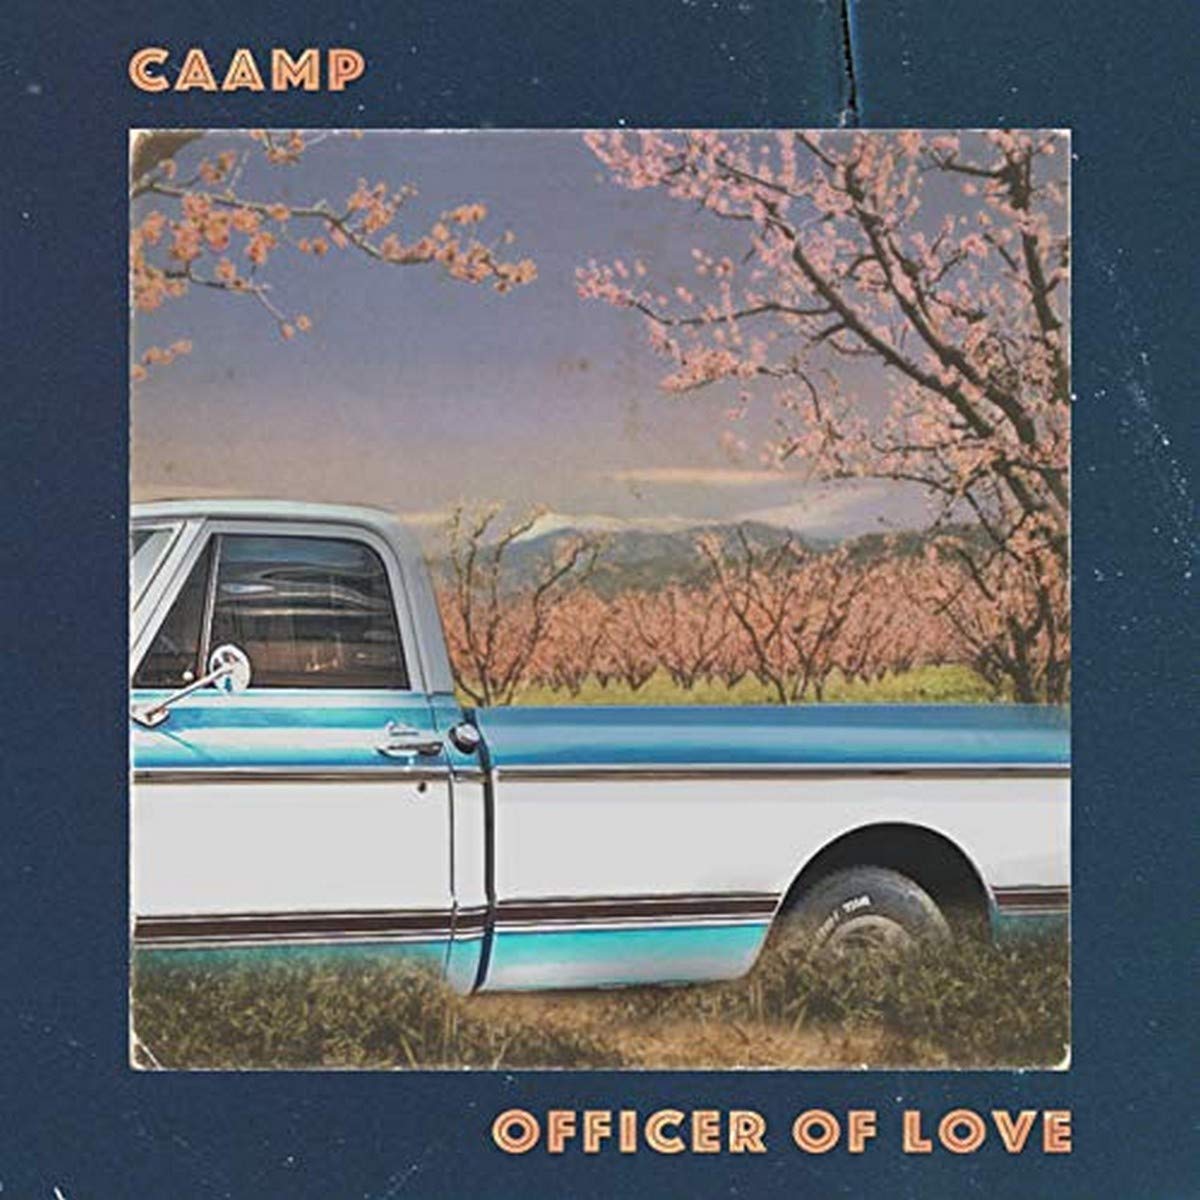 Caamp - Officer Of Love [7" Vinyl]